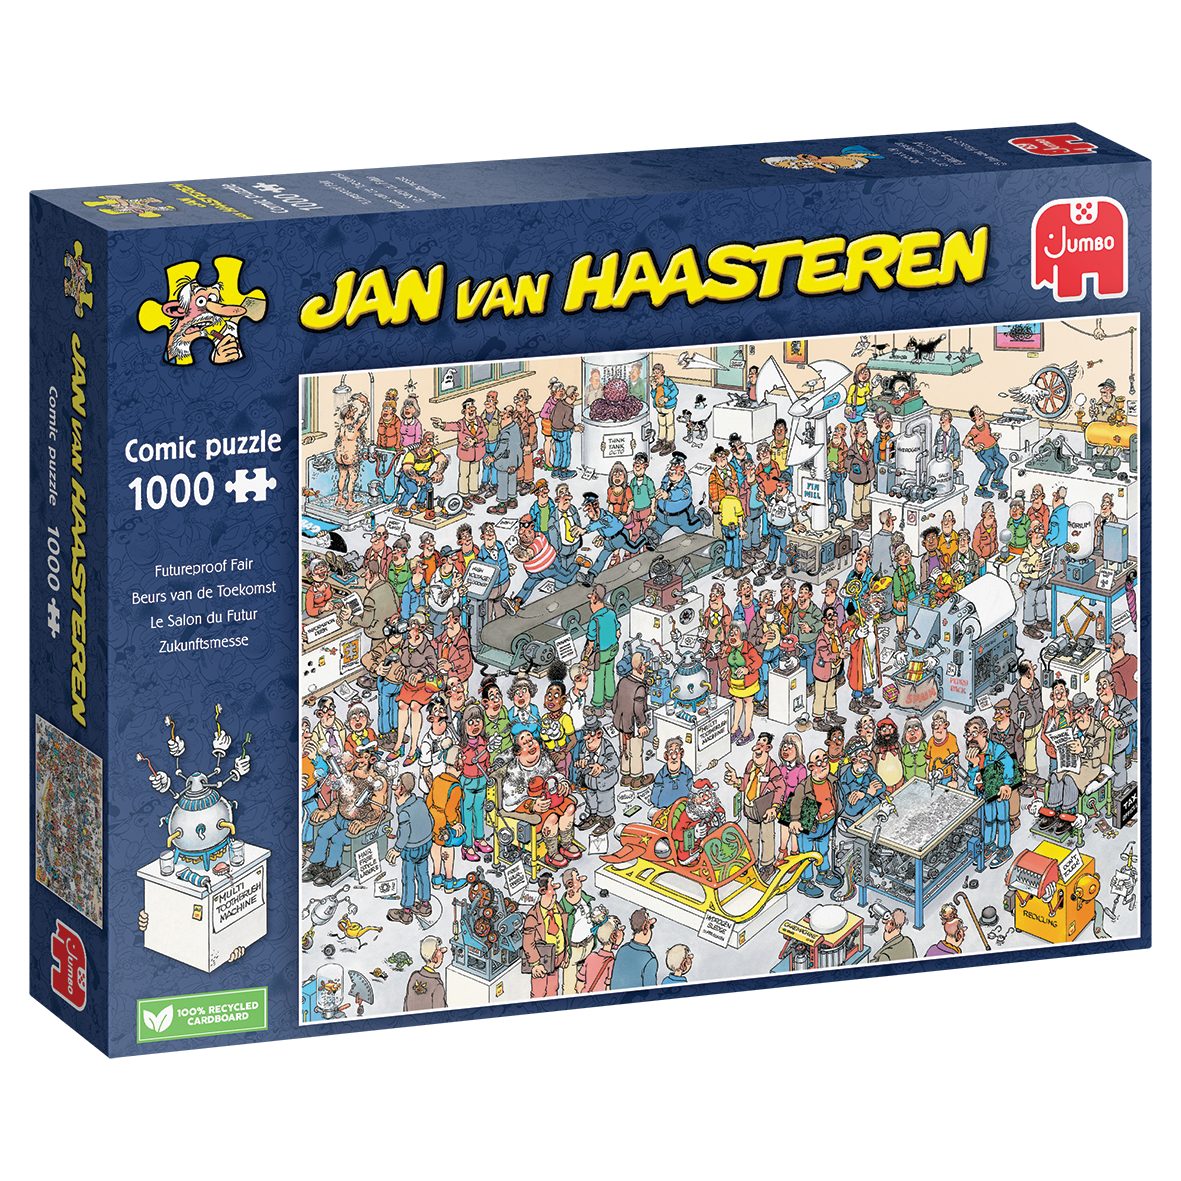 Jumbo Spiele Puzzle Jan van Haasteren Zukunftsmesse 1000 Teile Puzzle, 1000 Puzzleteile